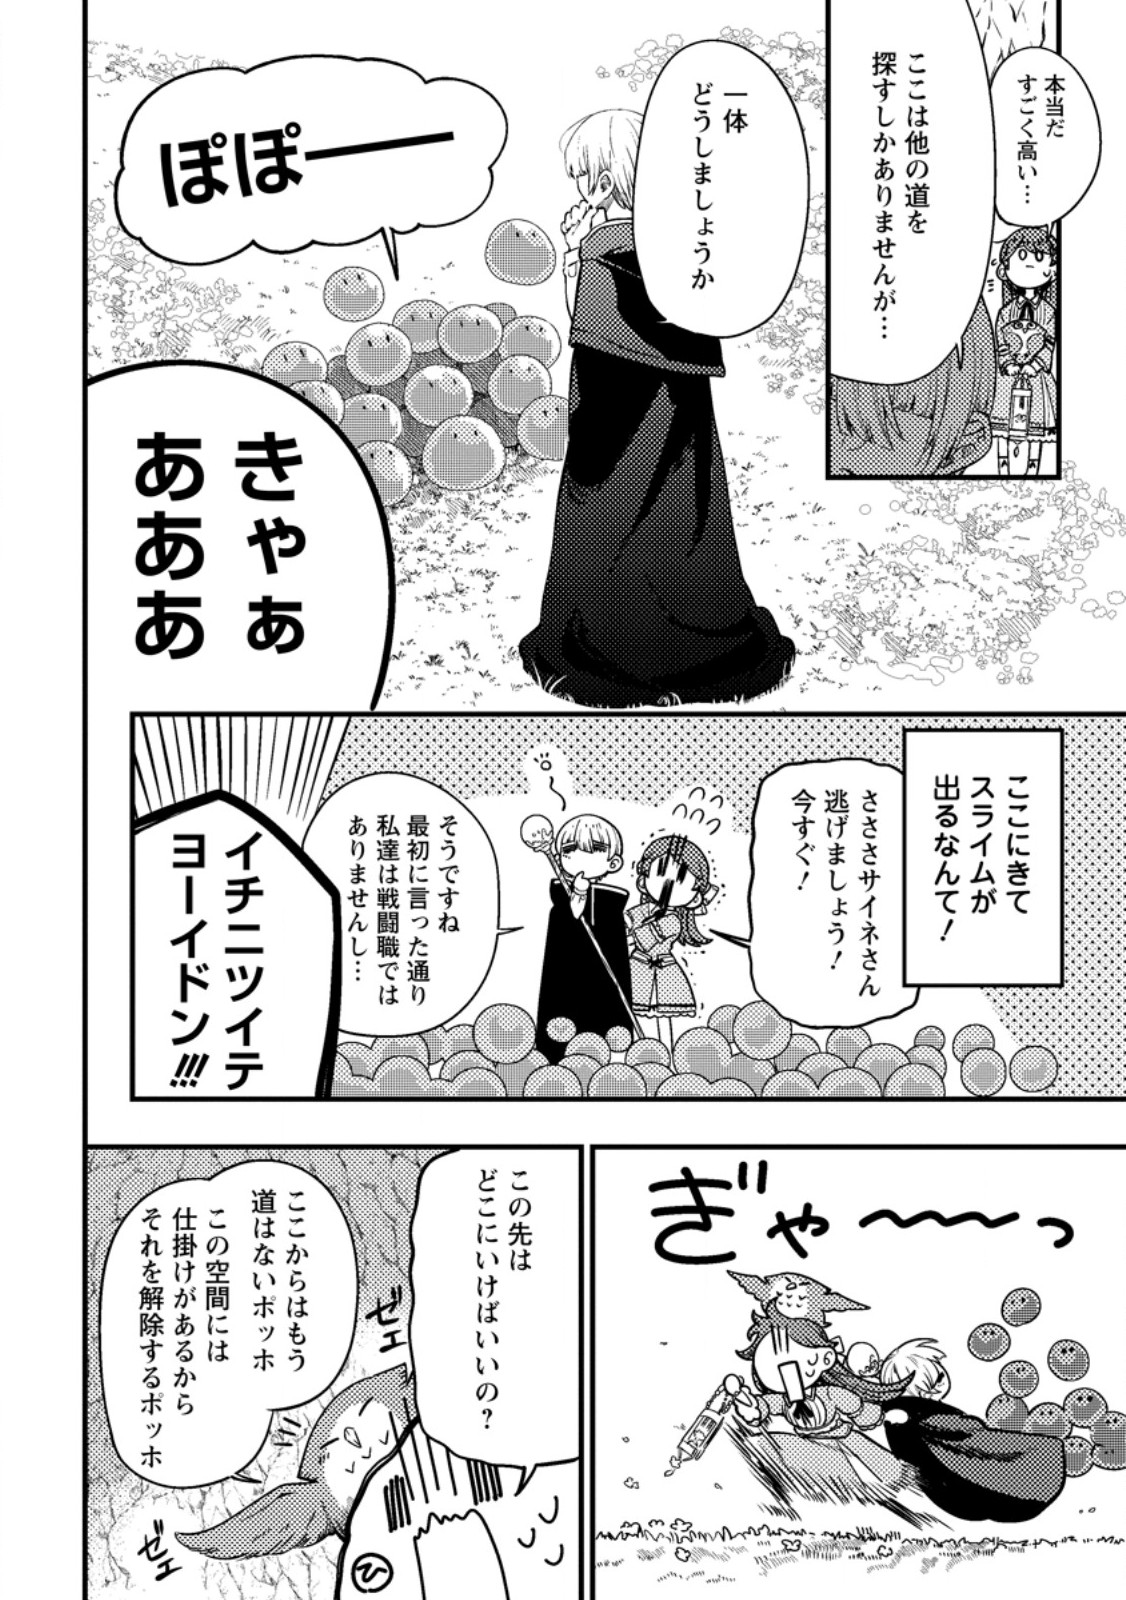 Hakoniwa no Yakujutsushi - Chapter 36.2 - Page 10